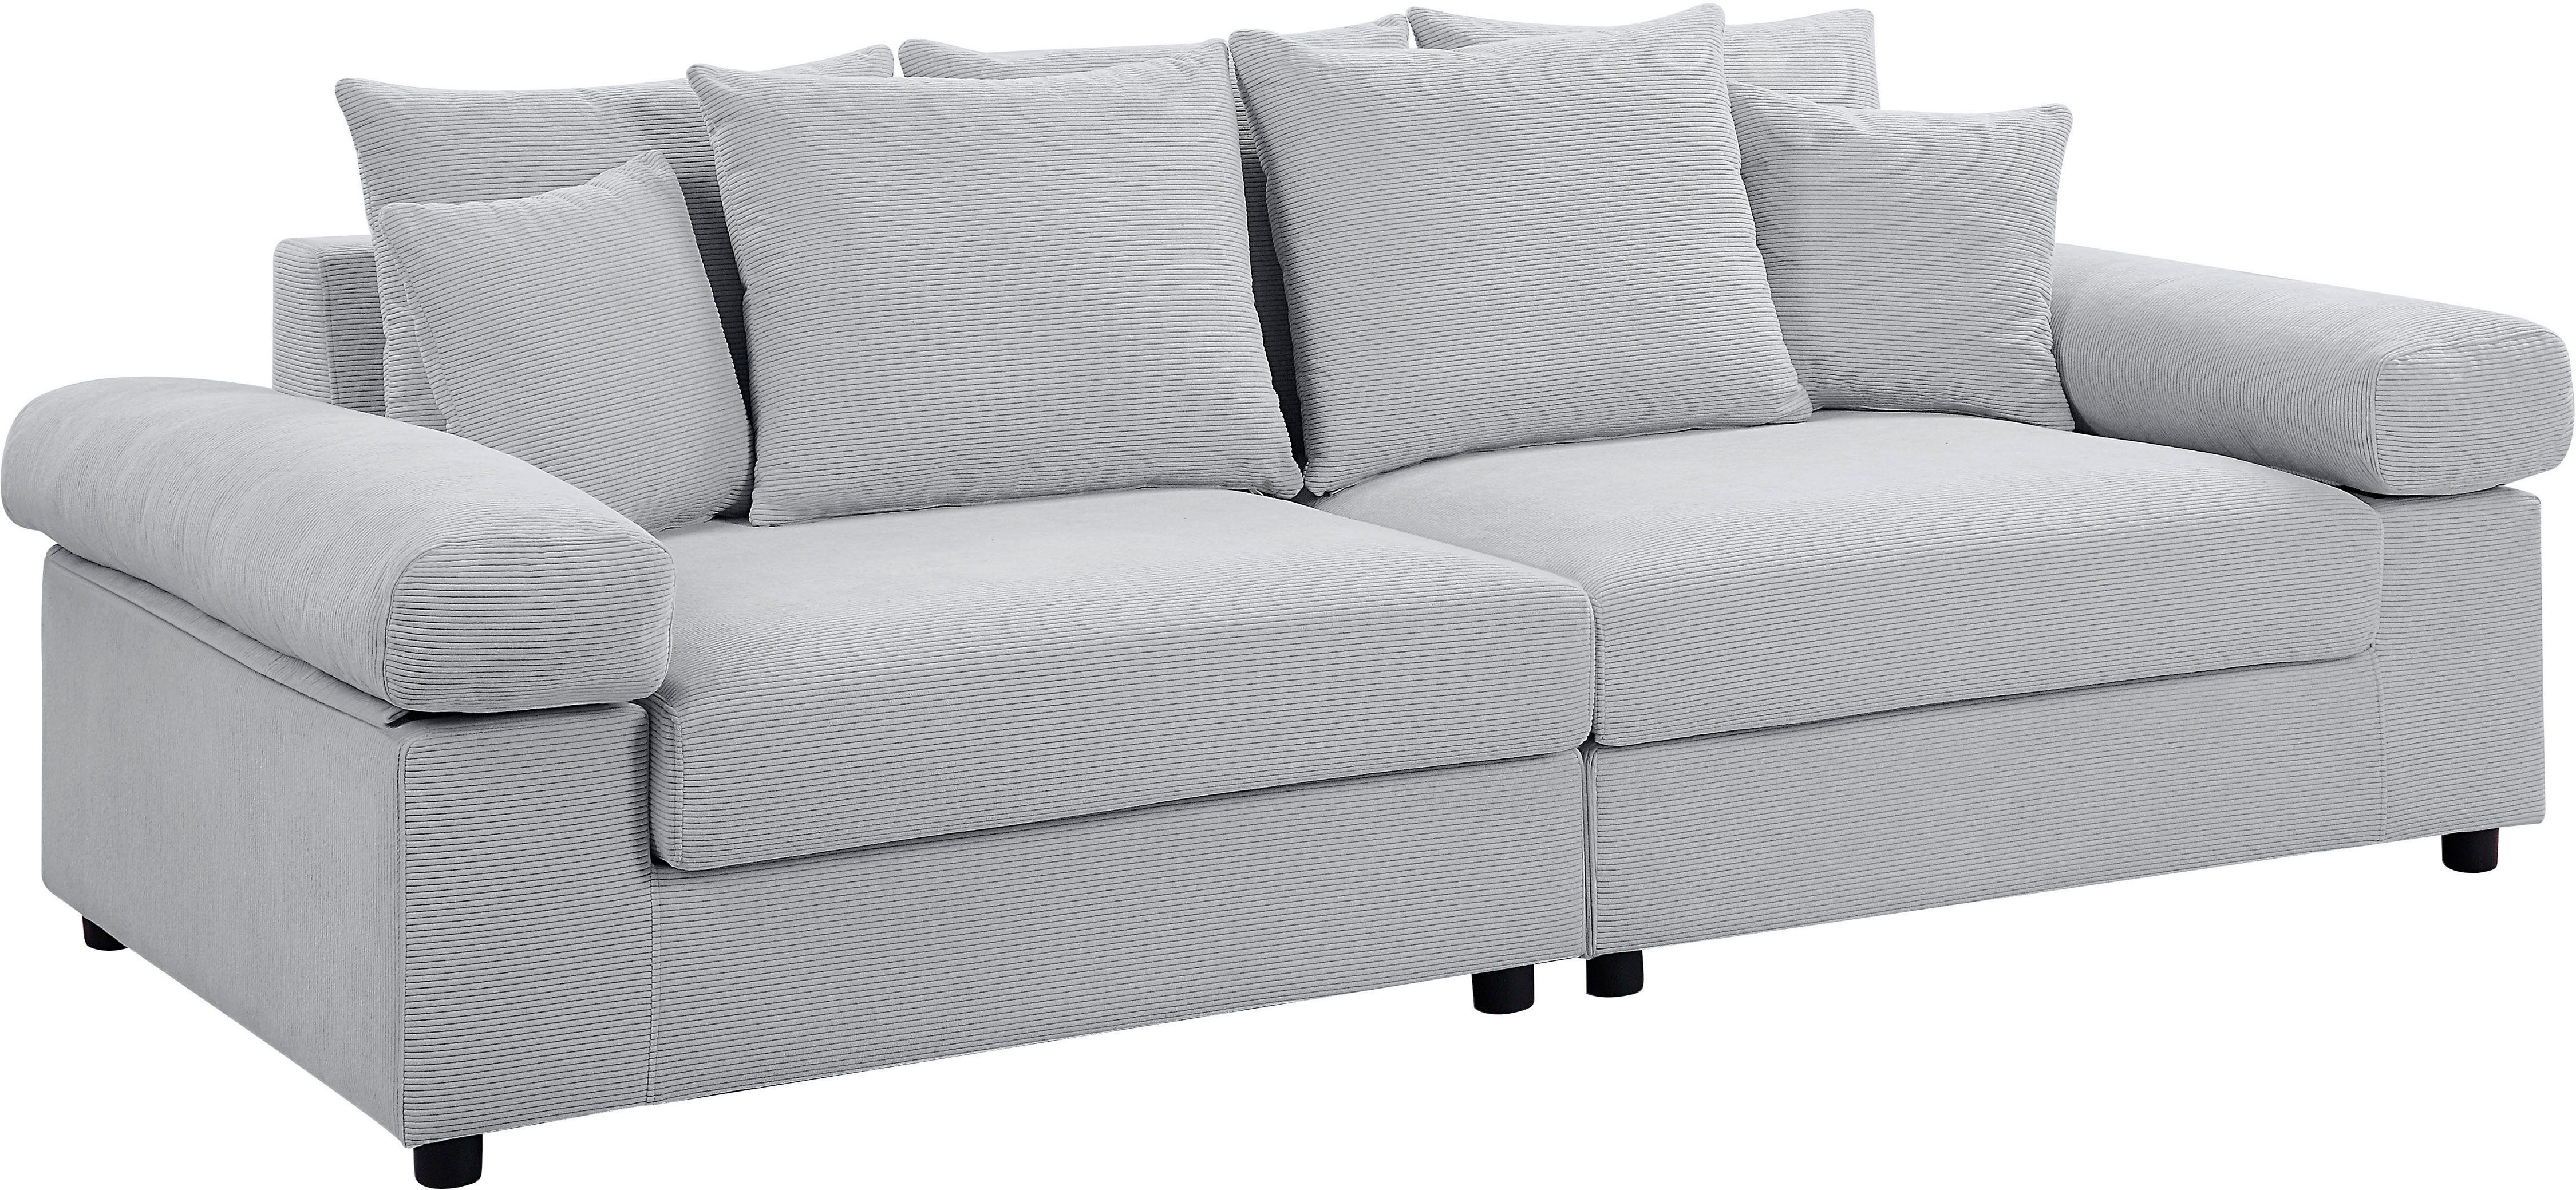 Federkern, Big-Sofa mit frei im stellbar Cord-Bezug, grau Bjoern, XXL-Sitzfläche, home mit Raum ATLANTIC collection